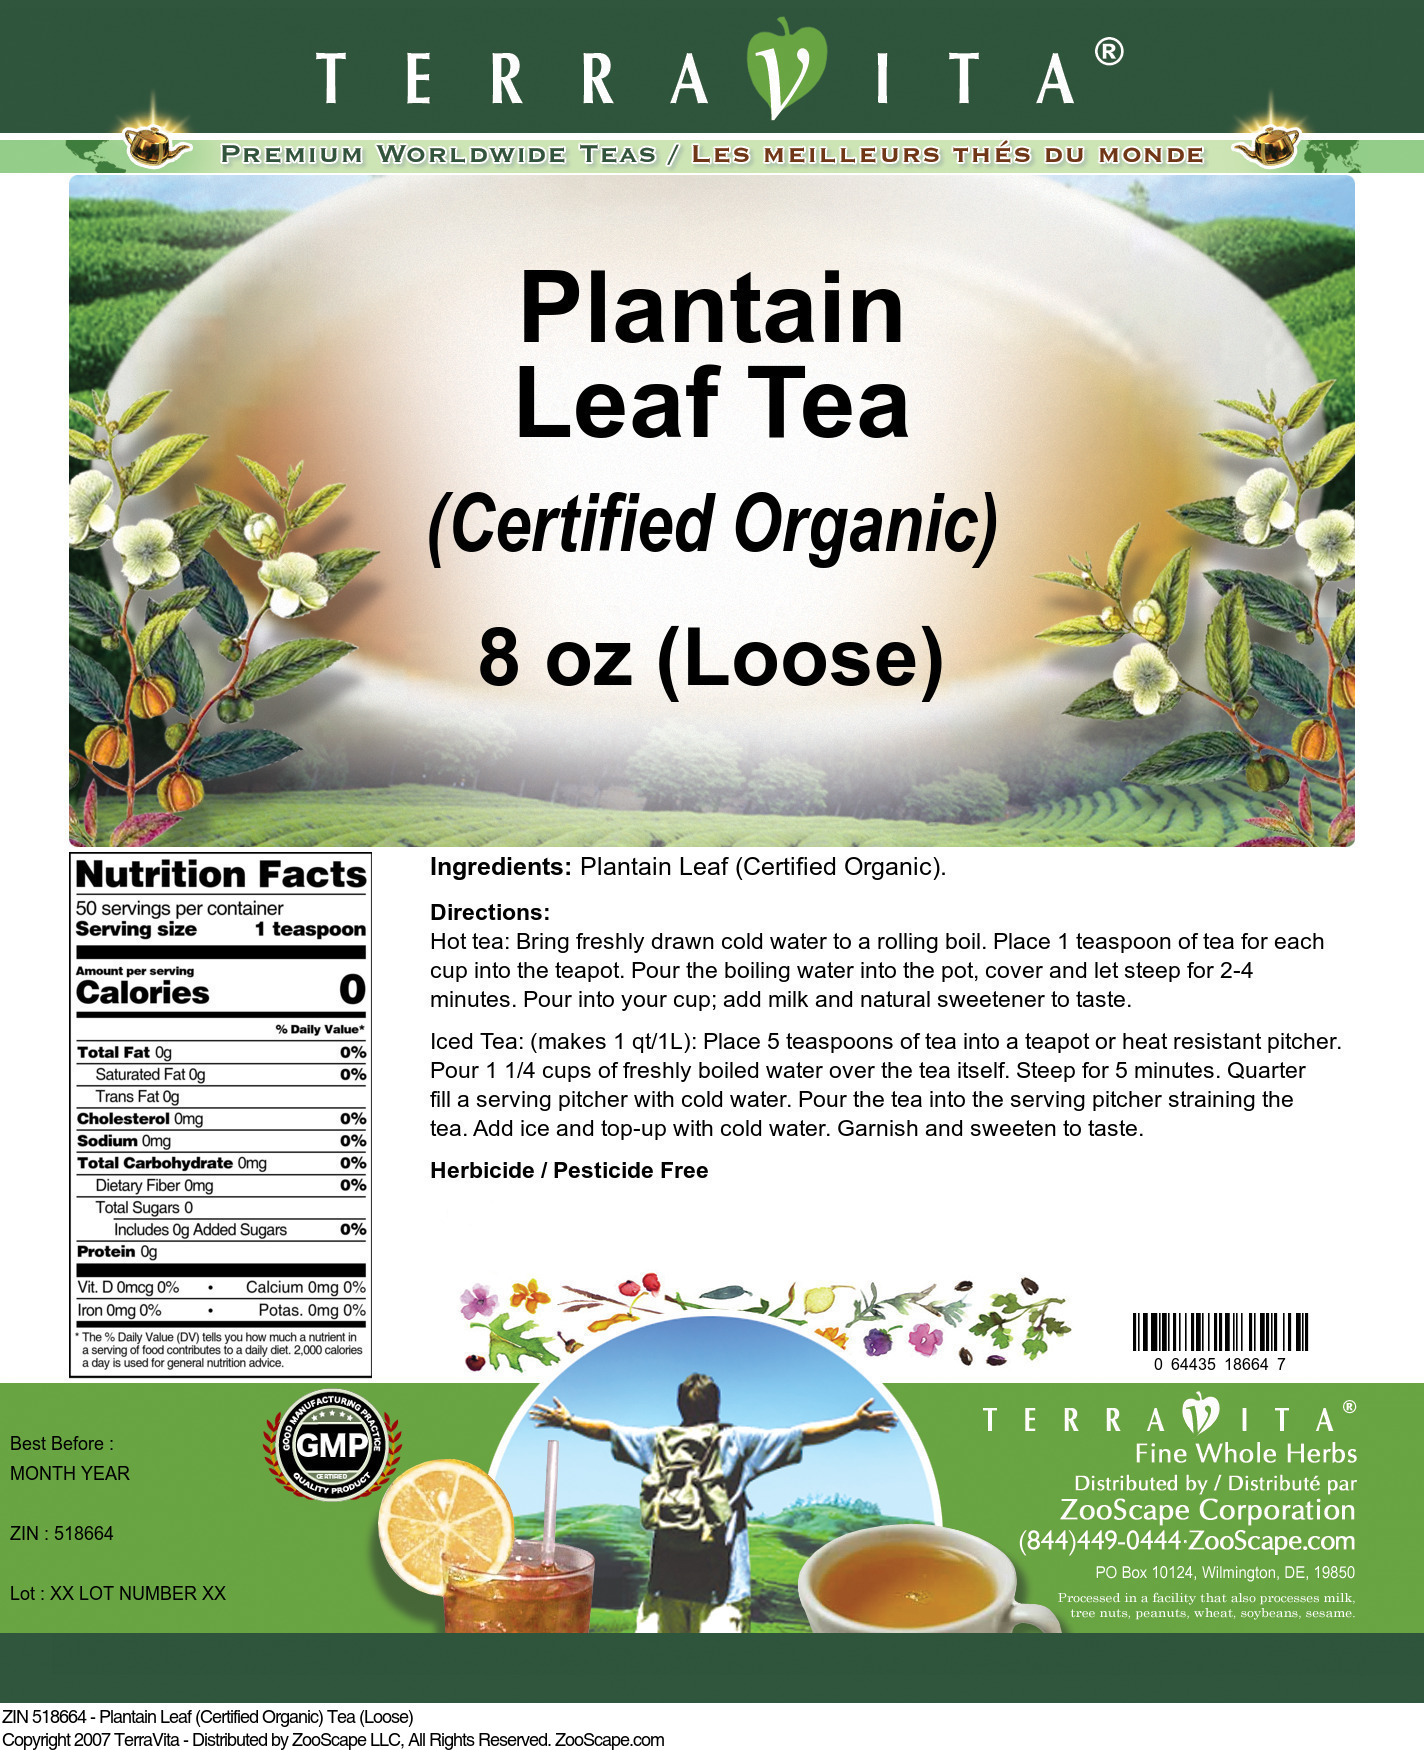 Plantain Leaf (Certified Organic) Tea (Loose) - Label